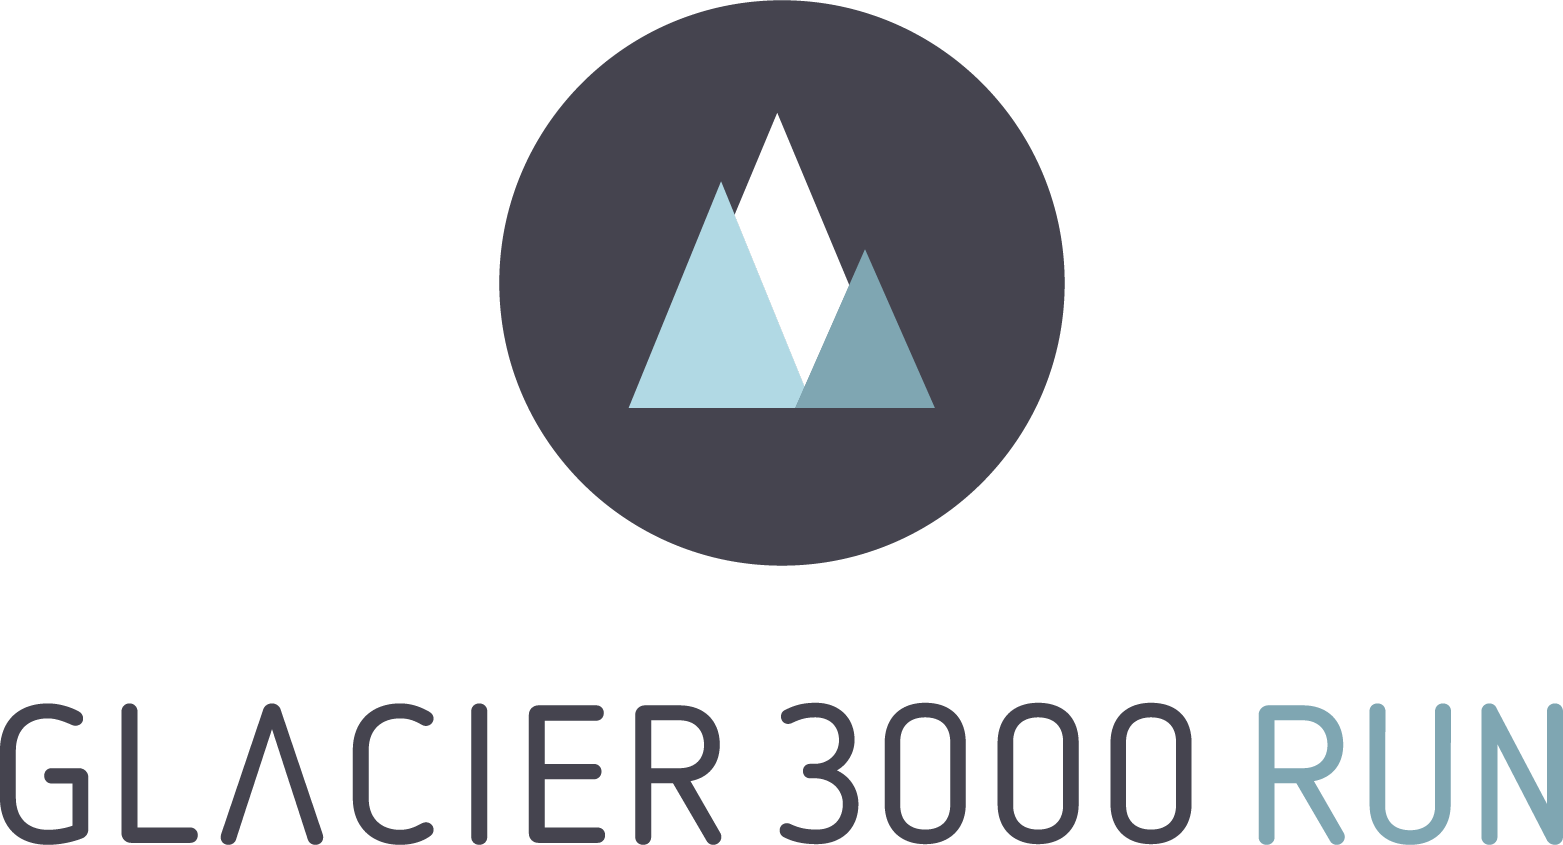 15. Glacier 3000 Run